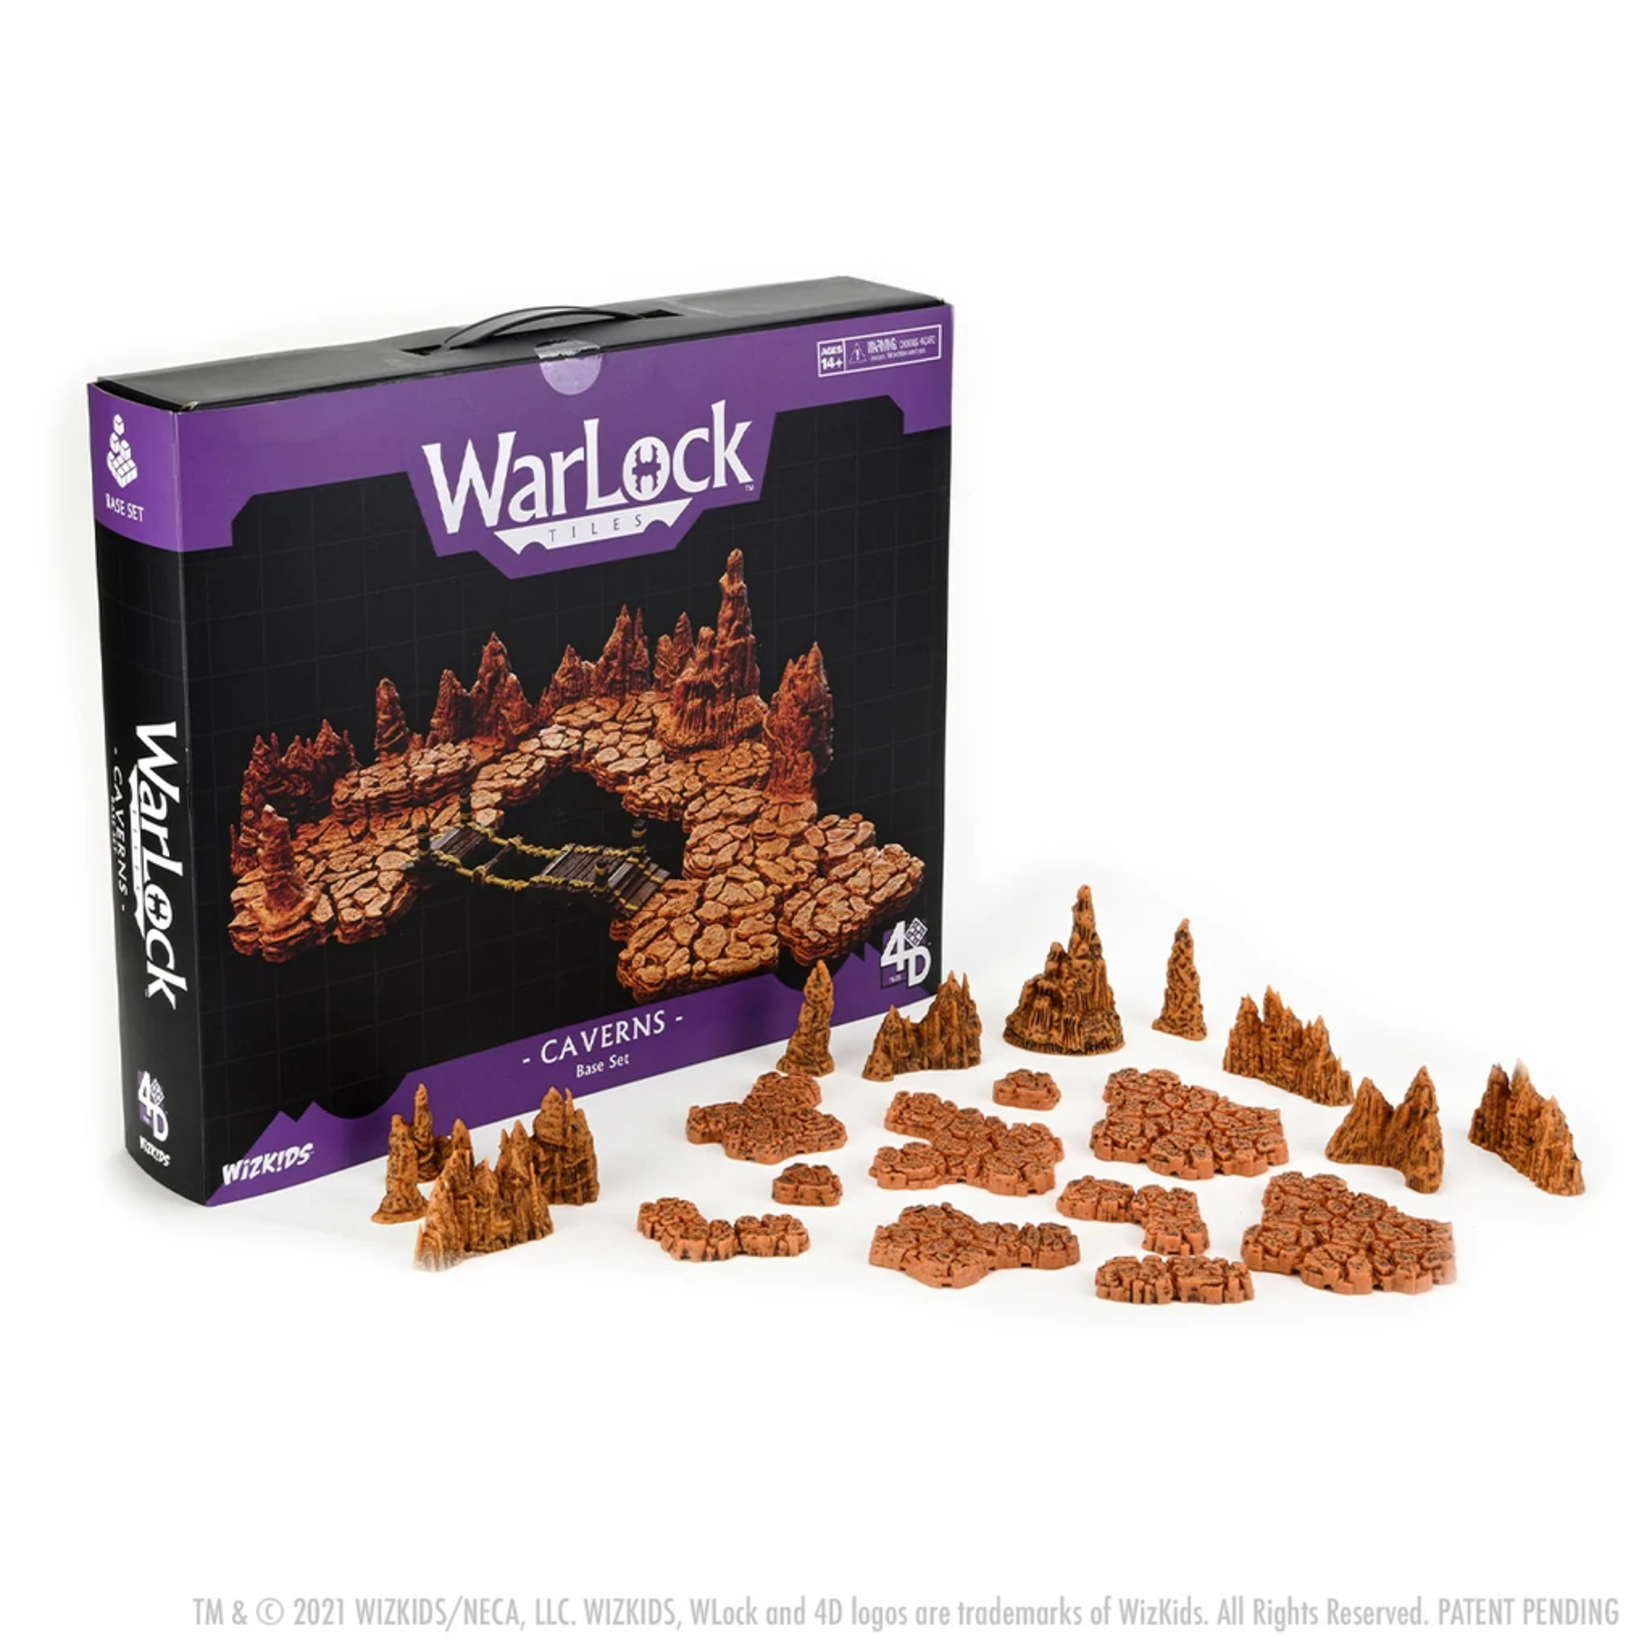 WIZKIDS/NECA Warlock Tiles: Caverns Base Set